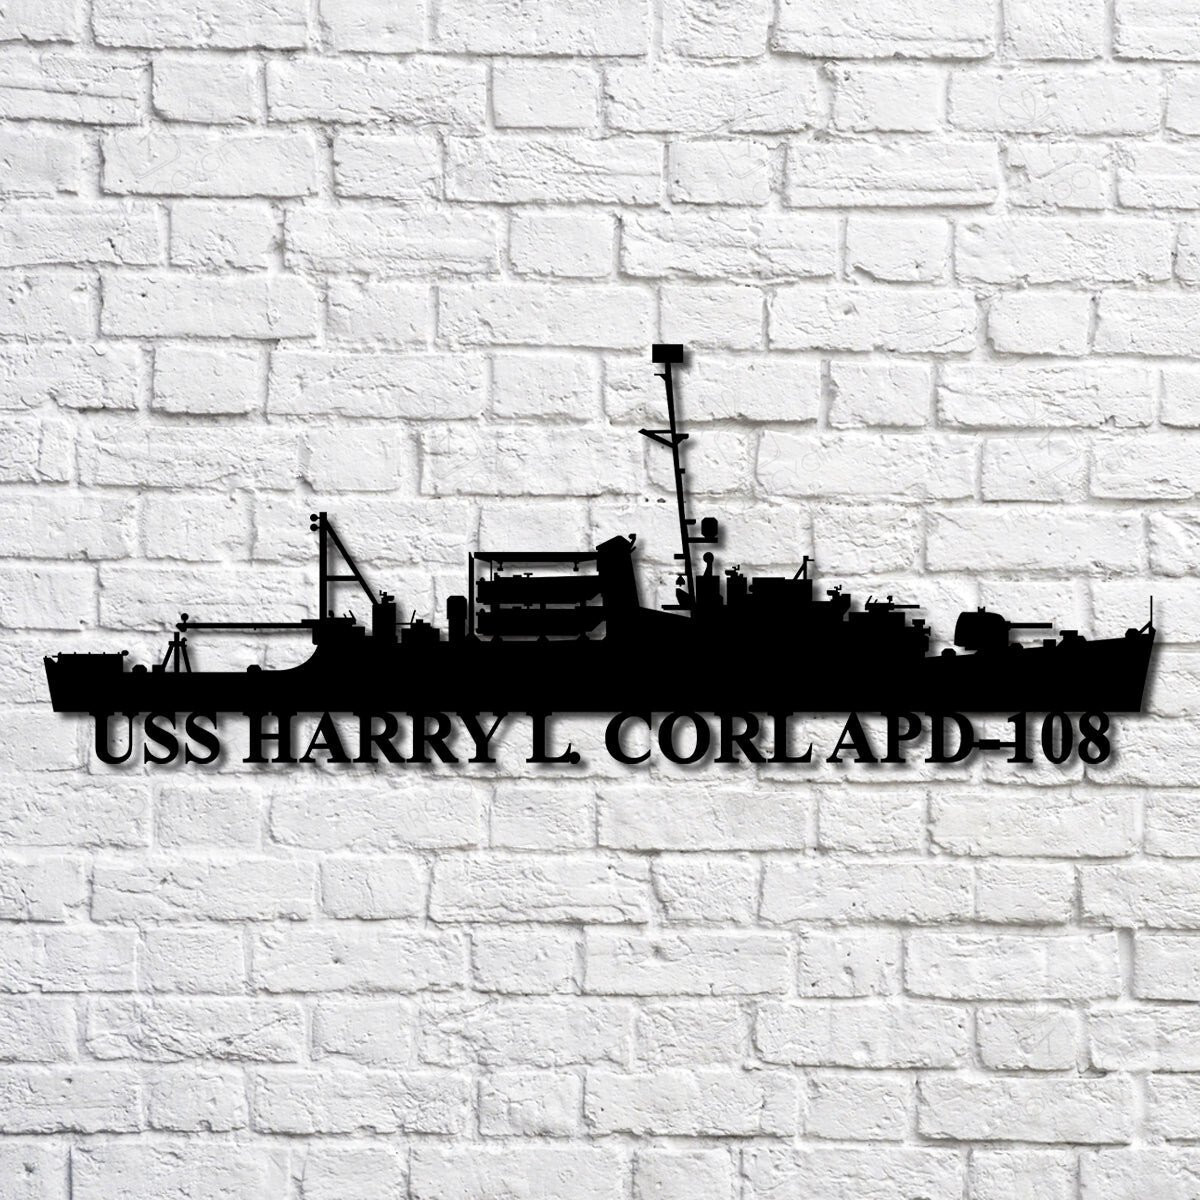 Uss Harry L. Corl Apd108 Navy Ship Metal Art, Custom Us Navy Ship Cut Metal Sign, Gift For Navy Veteran, Navy Ships Silhouette Metal Art, Navy Laser Cut Metal Signs 12x12IN